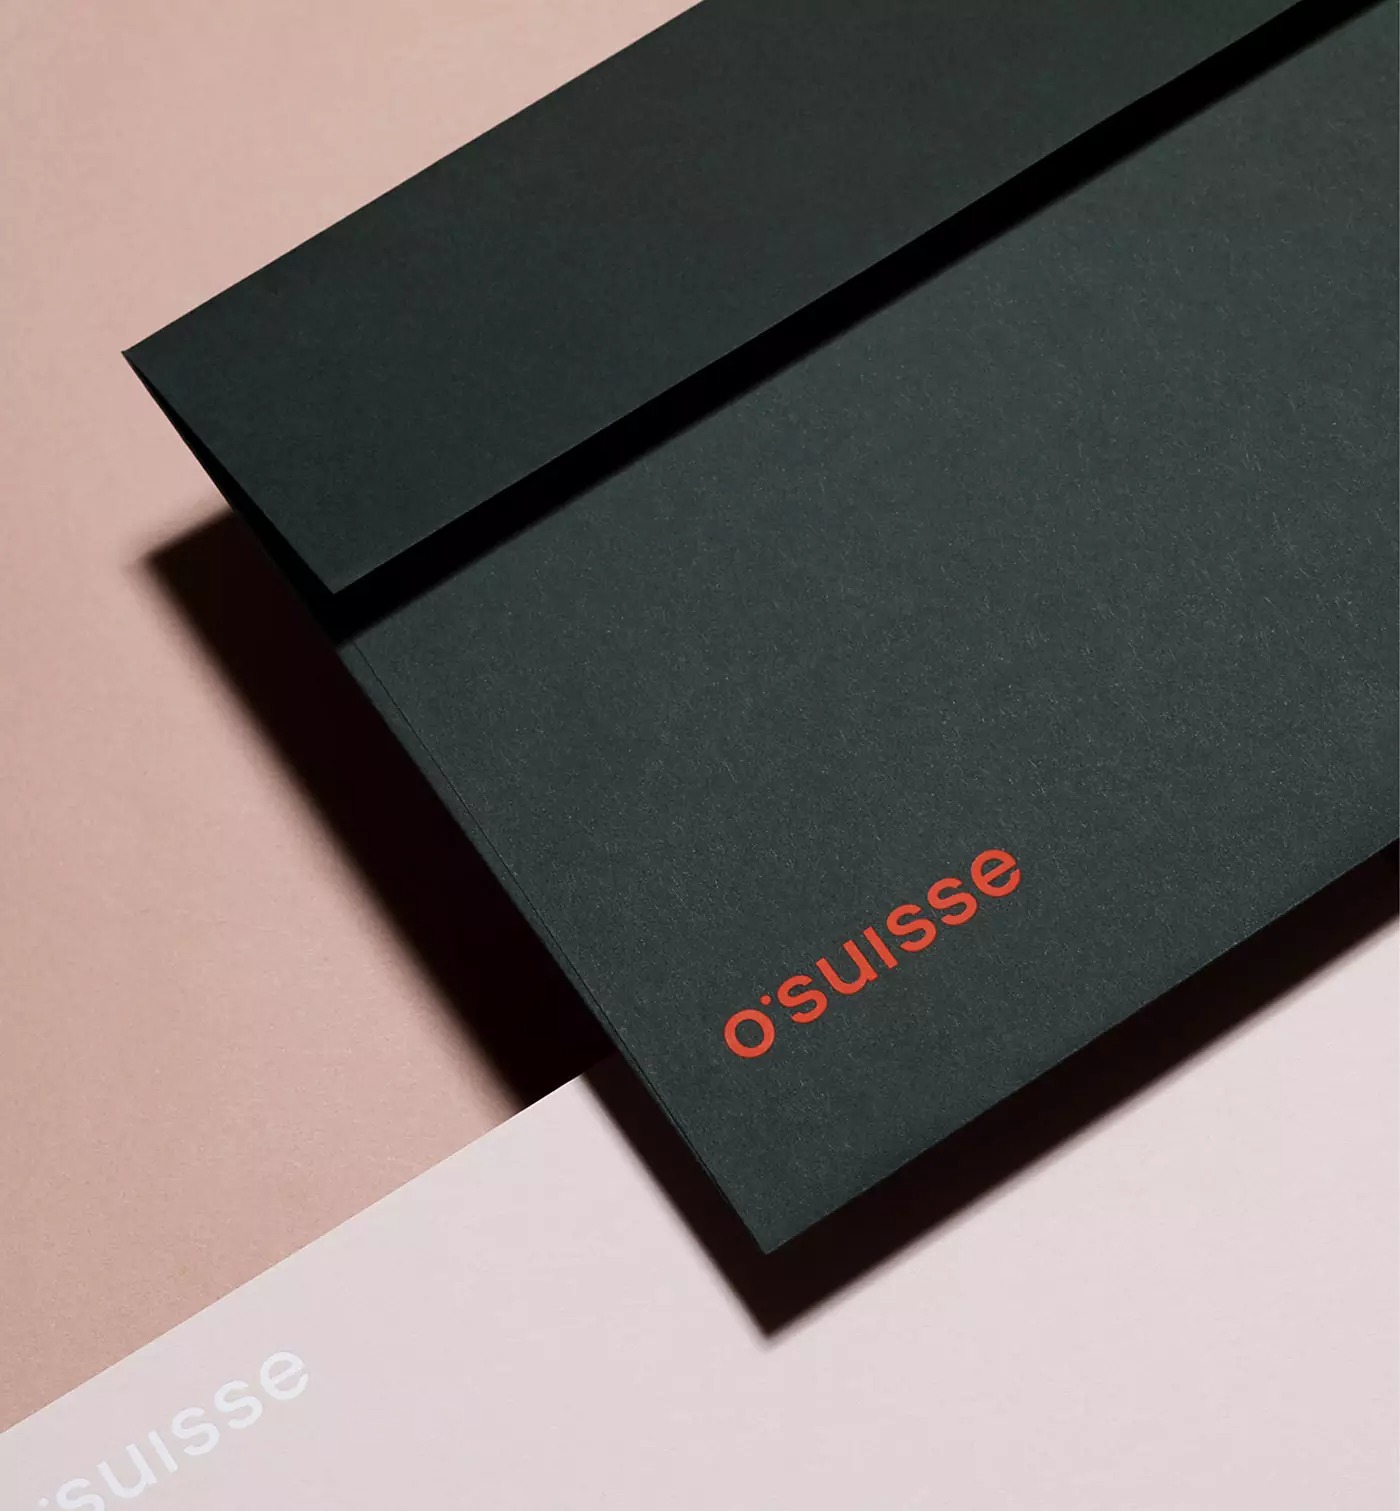 瑞士水品牌OSUISSE视觉设计